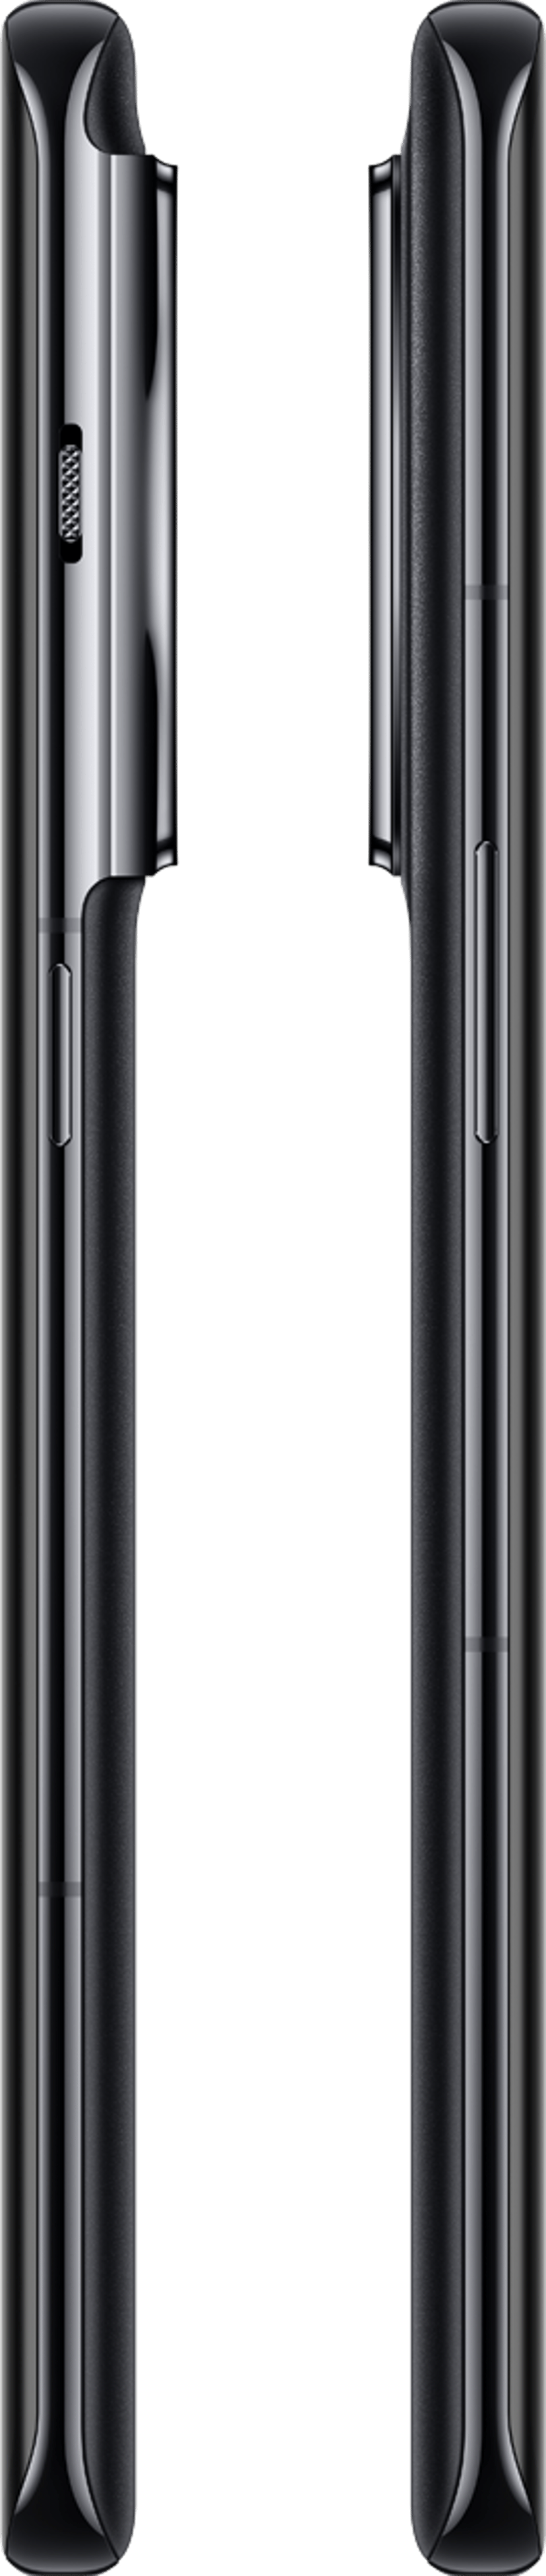 OnePlus 11 128GB Musta